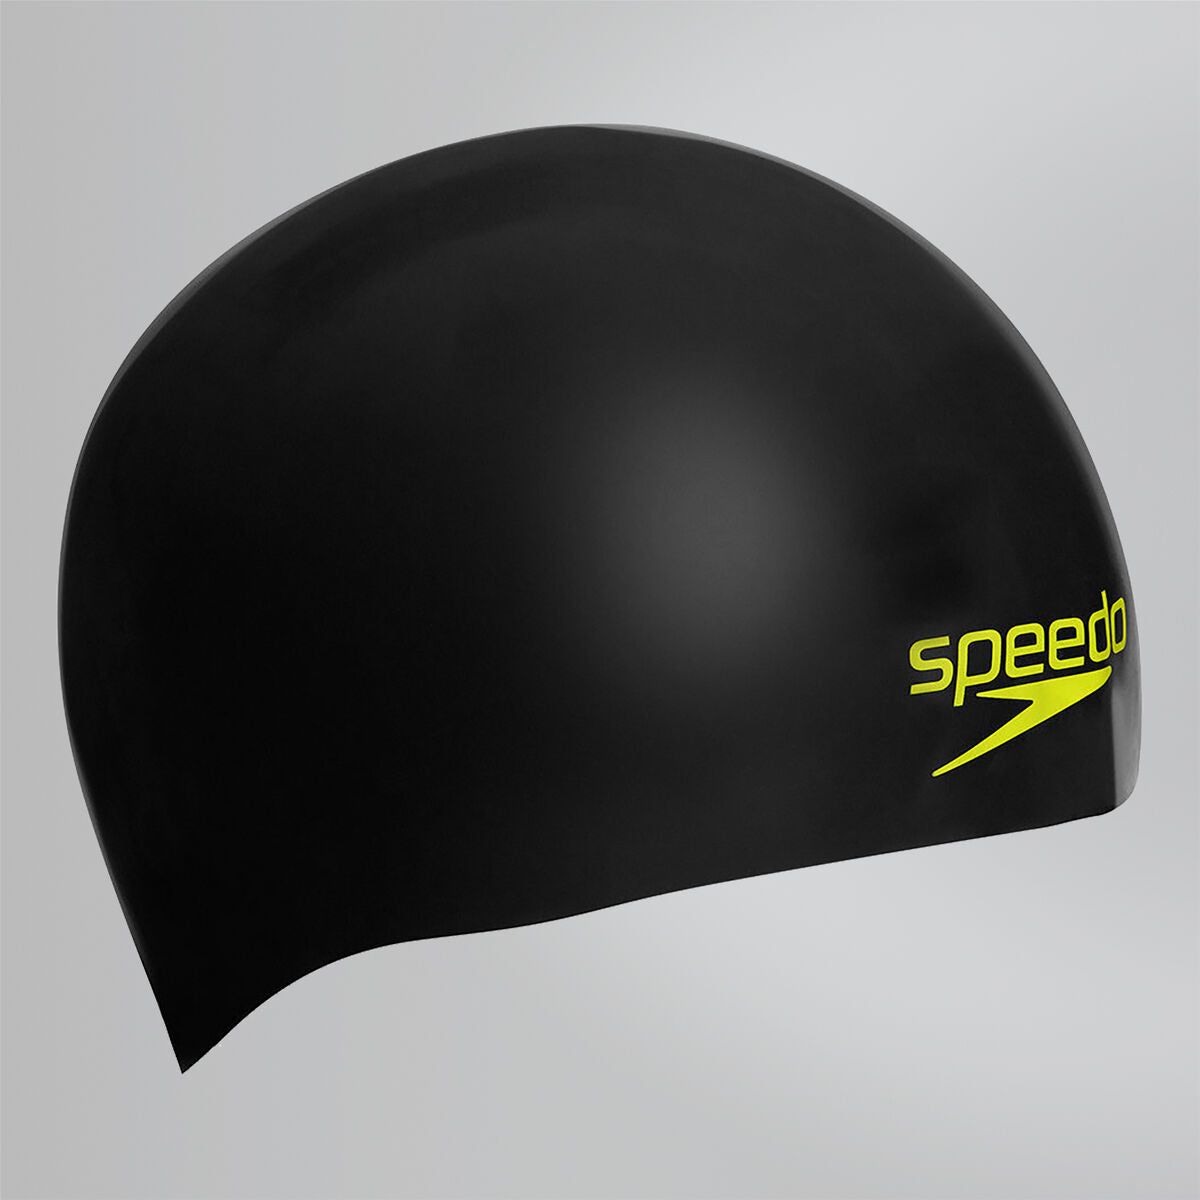 Speedo Fastskin 3 Racing Cap Black.Yellow